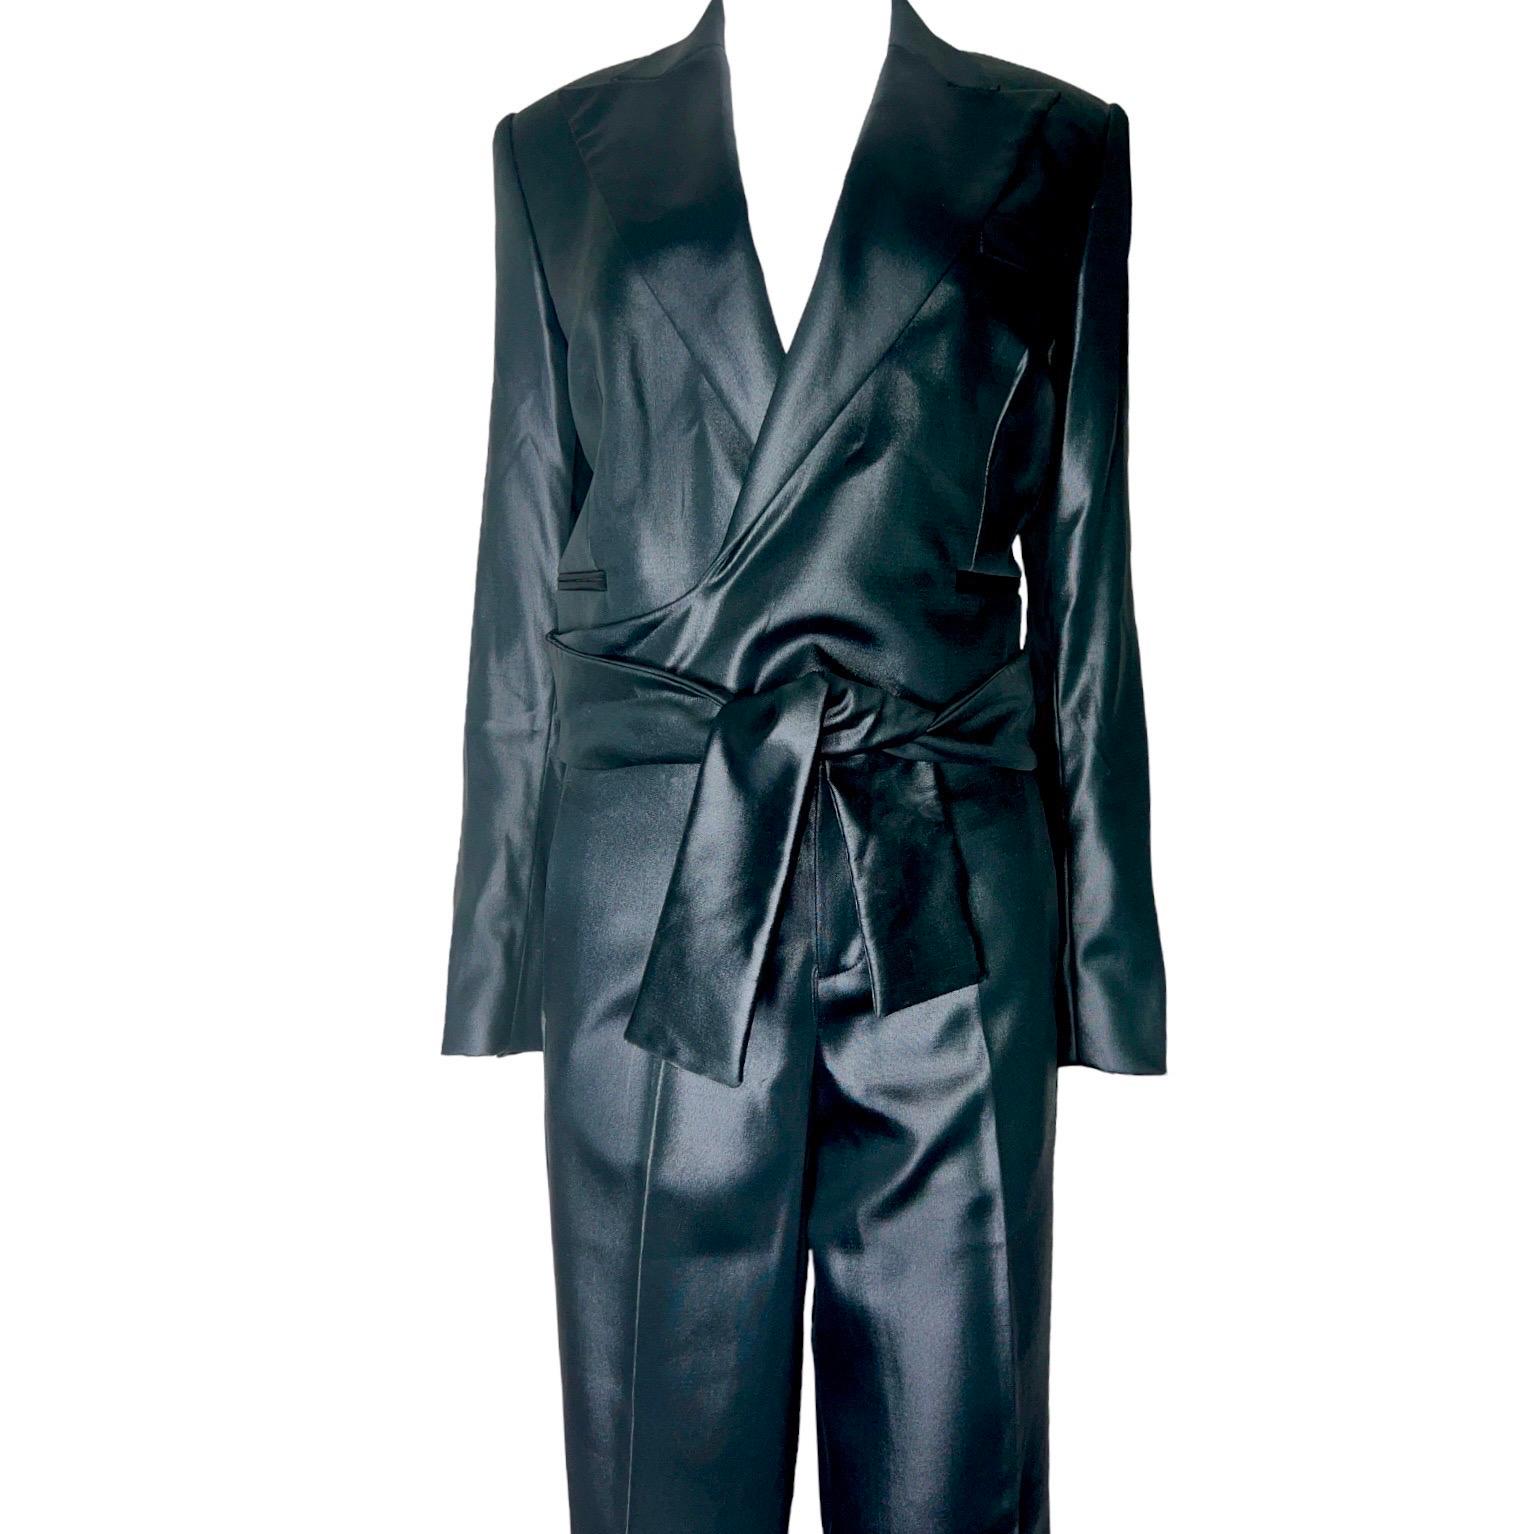  Gucci by Tom Ford Y2K - Veste portefeuille noire, style smoking, non portée, taille 40 Pour femmes 